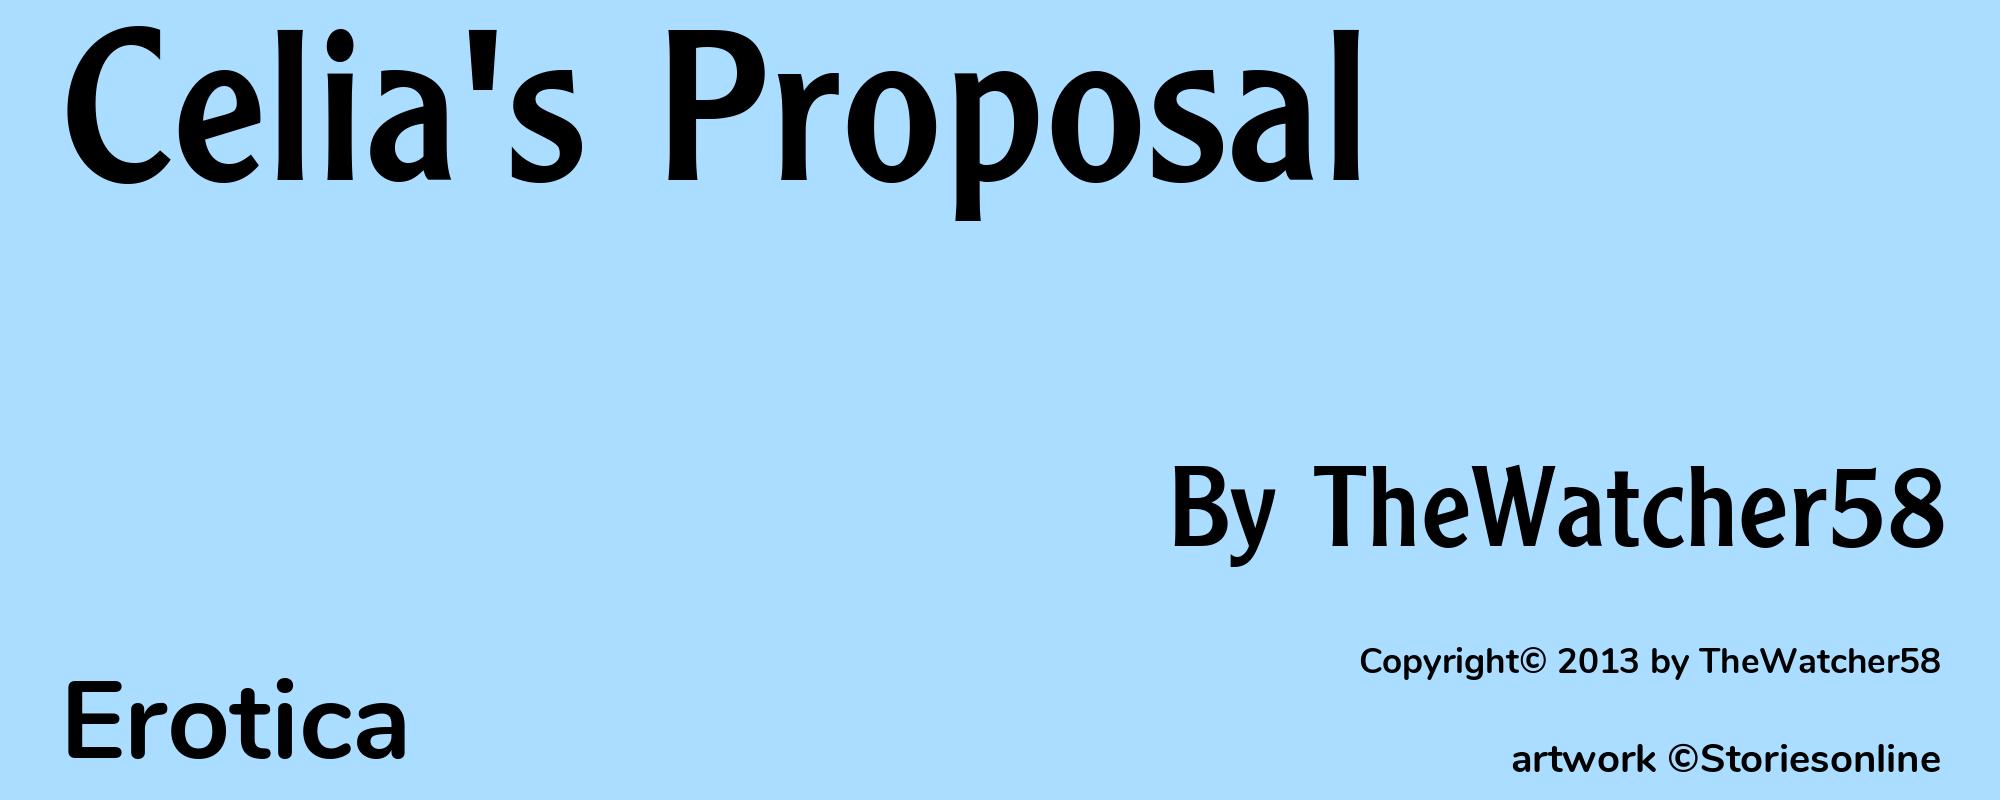 Celia's Proposal - Cover